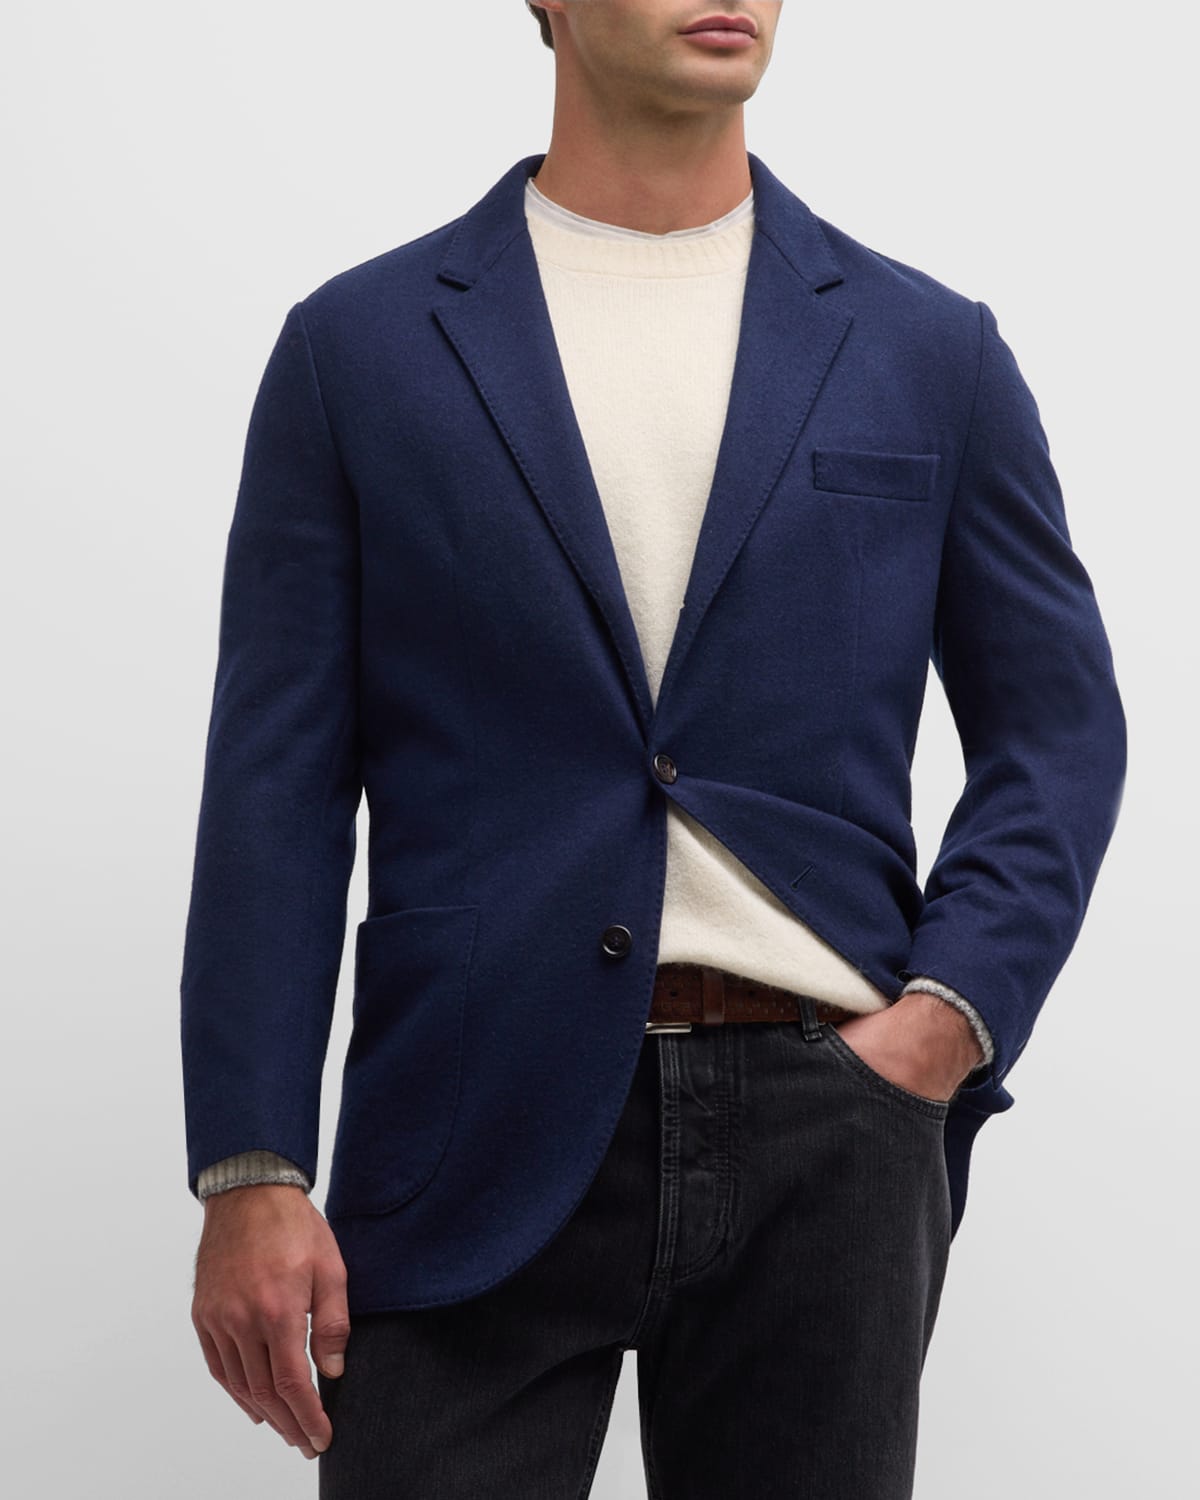 Men's Cashmere Jersey Two-Button Sport Coat